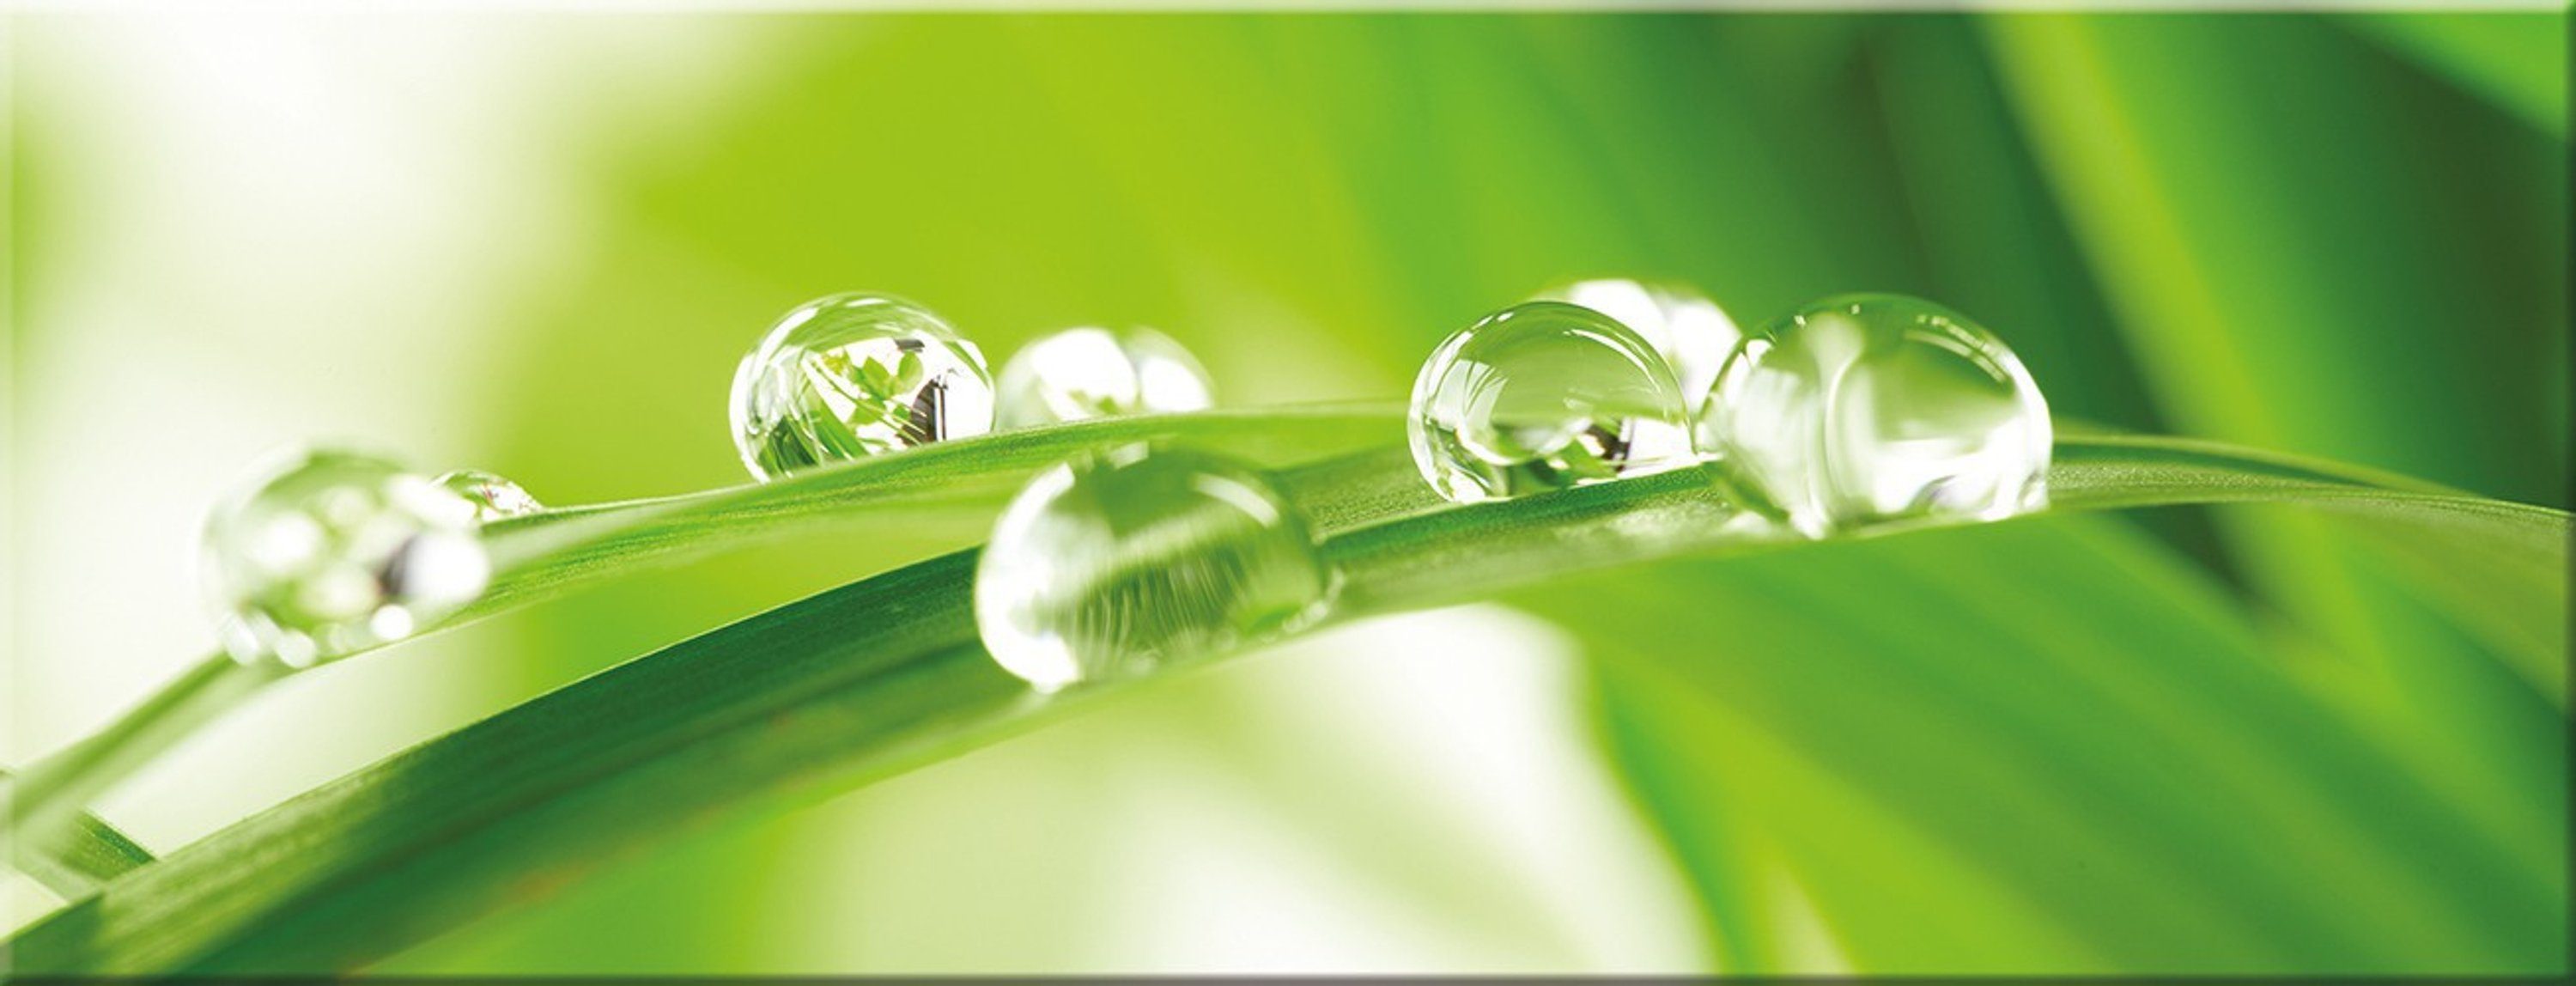 Natur: Blatt Blatt Wassertropfen mit Spa aus grün, Glas artissimo Wellness Glasbild Bild Glasbild 80x30cm